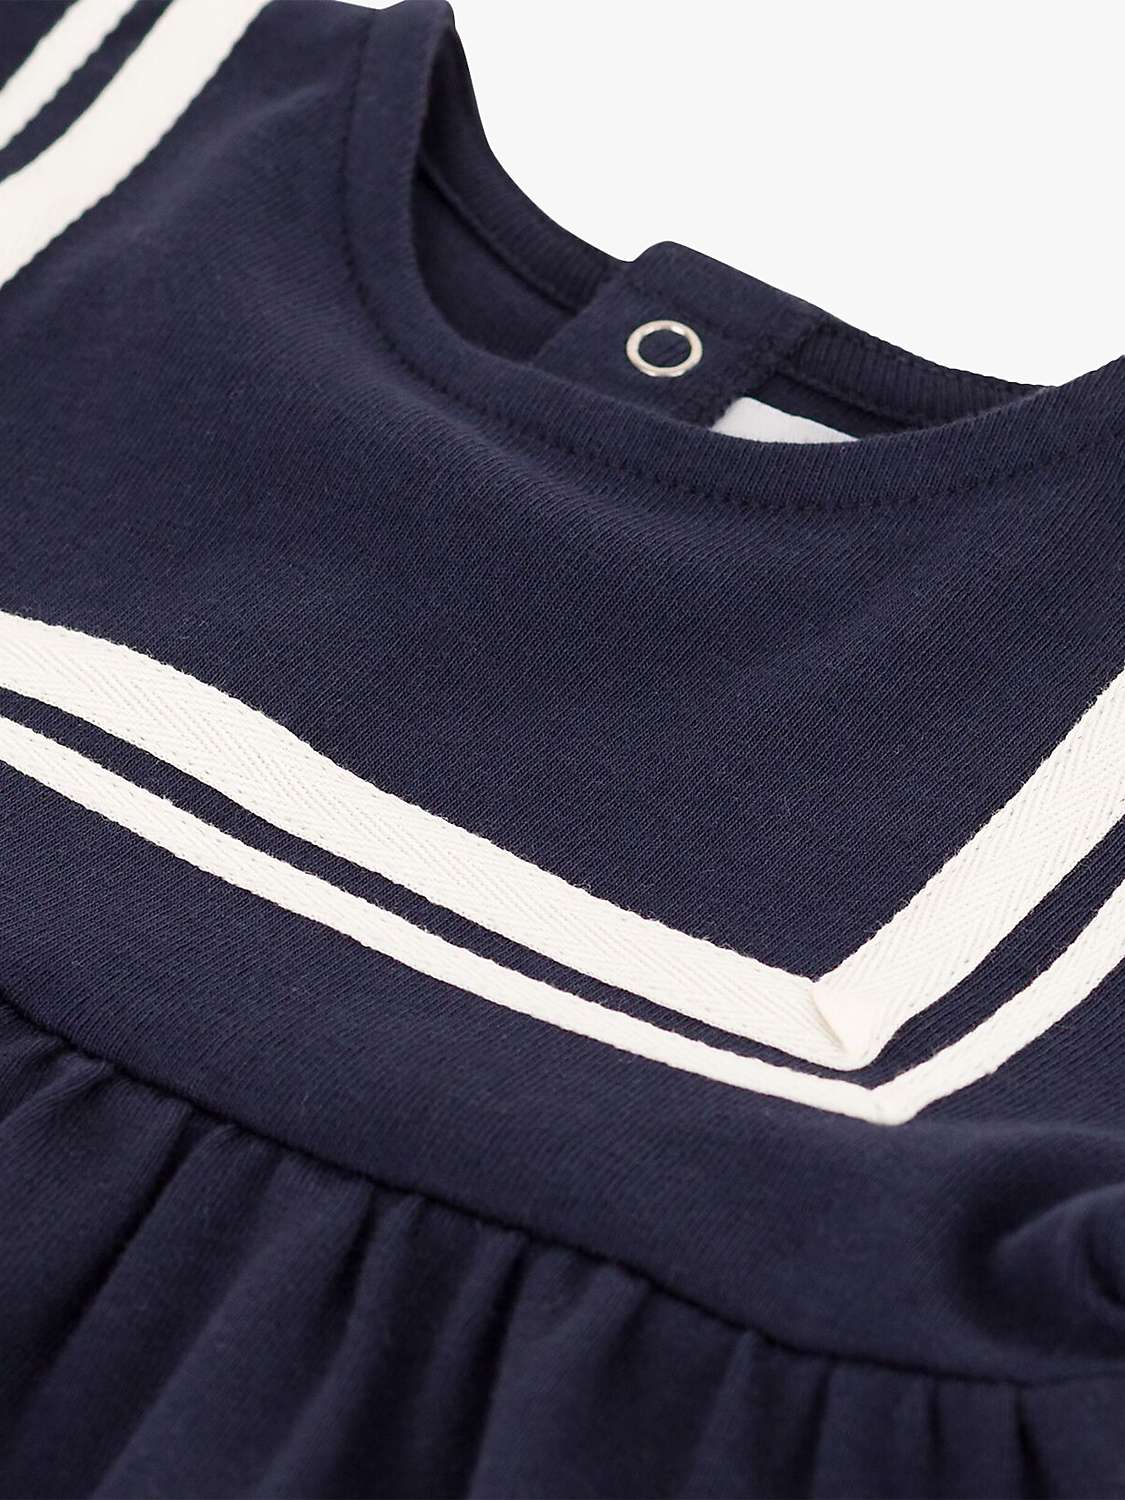 Buy Petit Bateau Baby Organic Cotton Sailor Dress, Smoked Blue/White Online at johnlewis.com